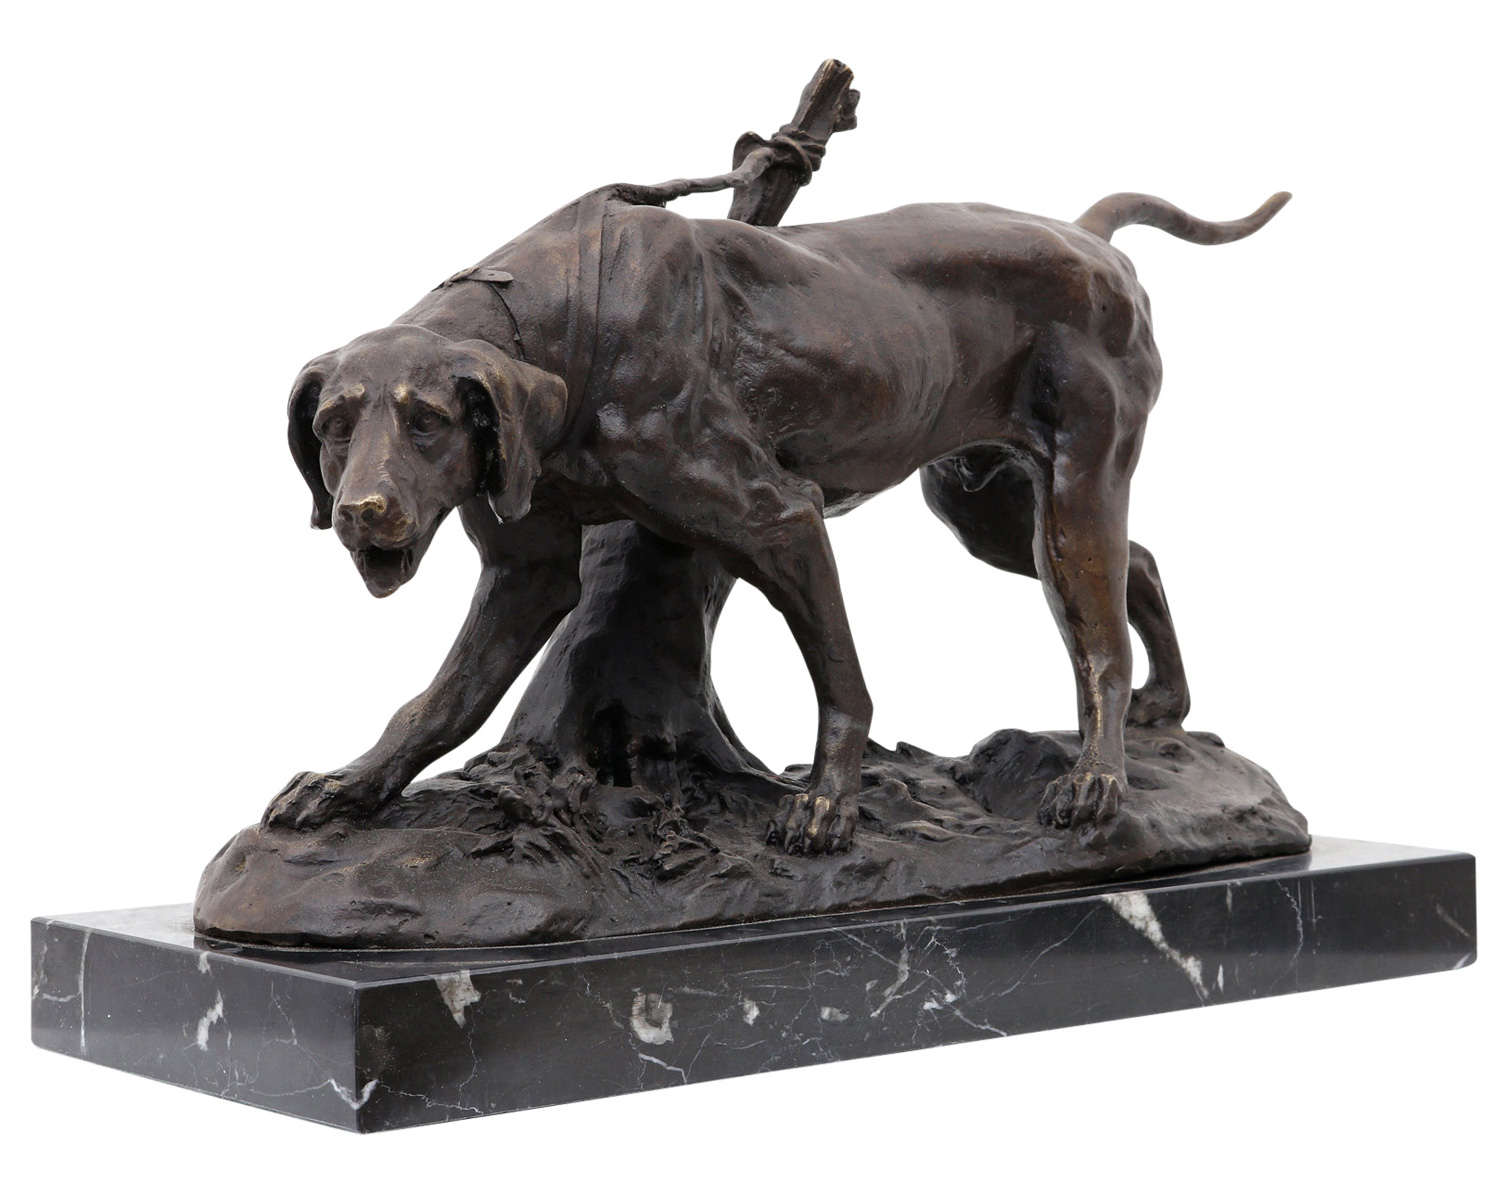 bassin Partina City Playful Bronze sculpture dog hound animal figure statue antique style 37cm | aubaho  ®